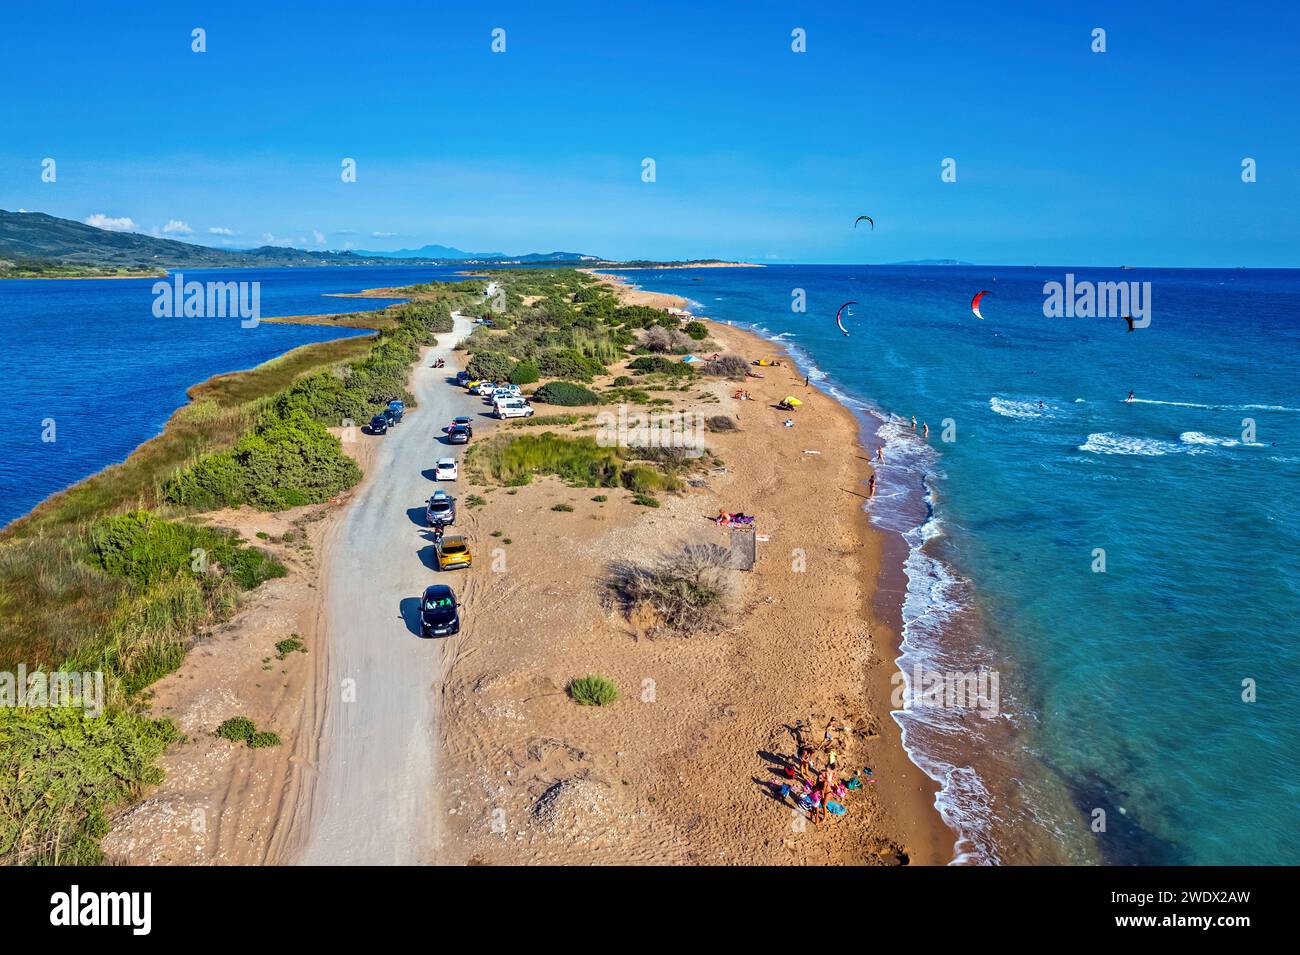 Aerial view of Halikounas beach (right next to lake Korission) a kitesurfers' "paradise" in Corfu island, Ionian sea, Greece. Stock Photo